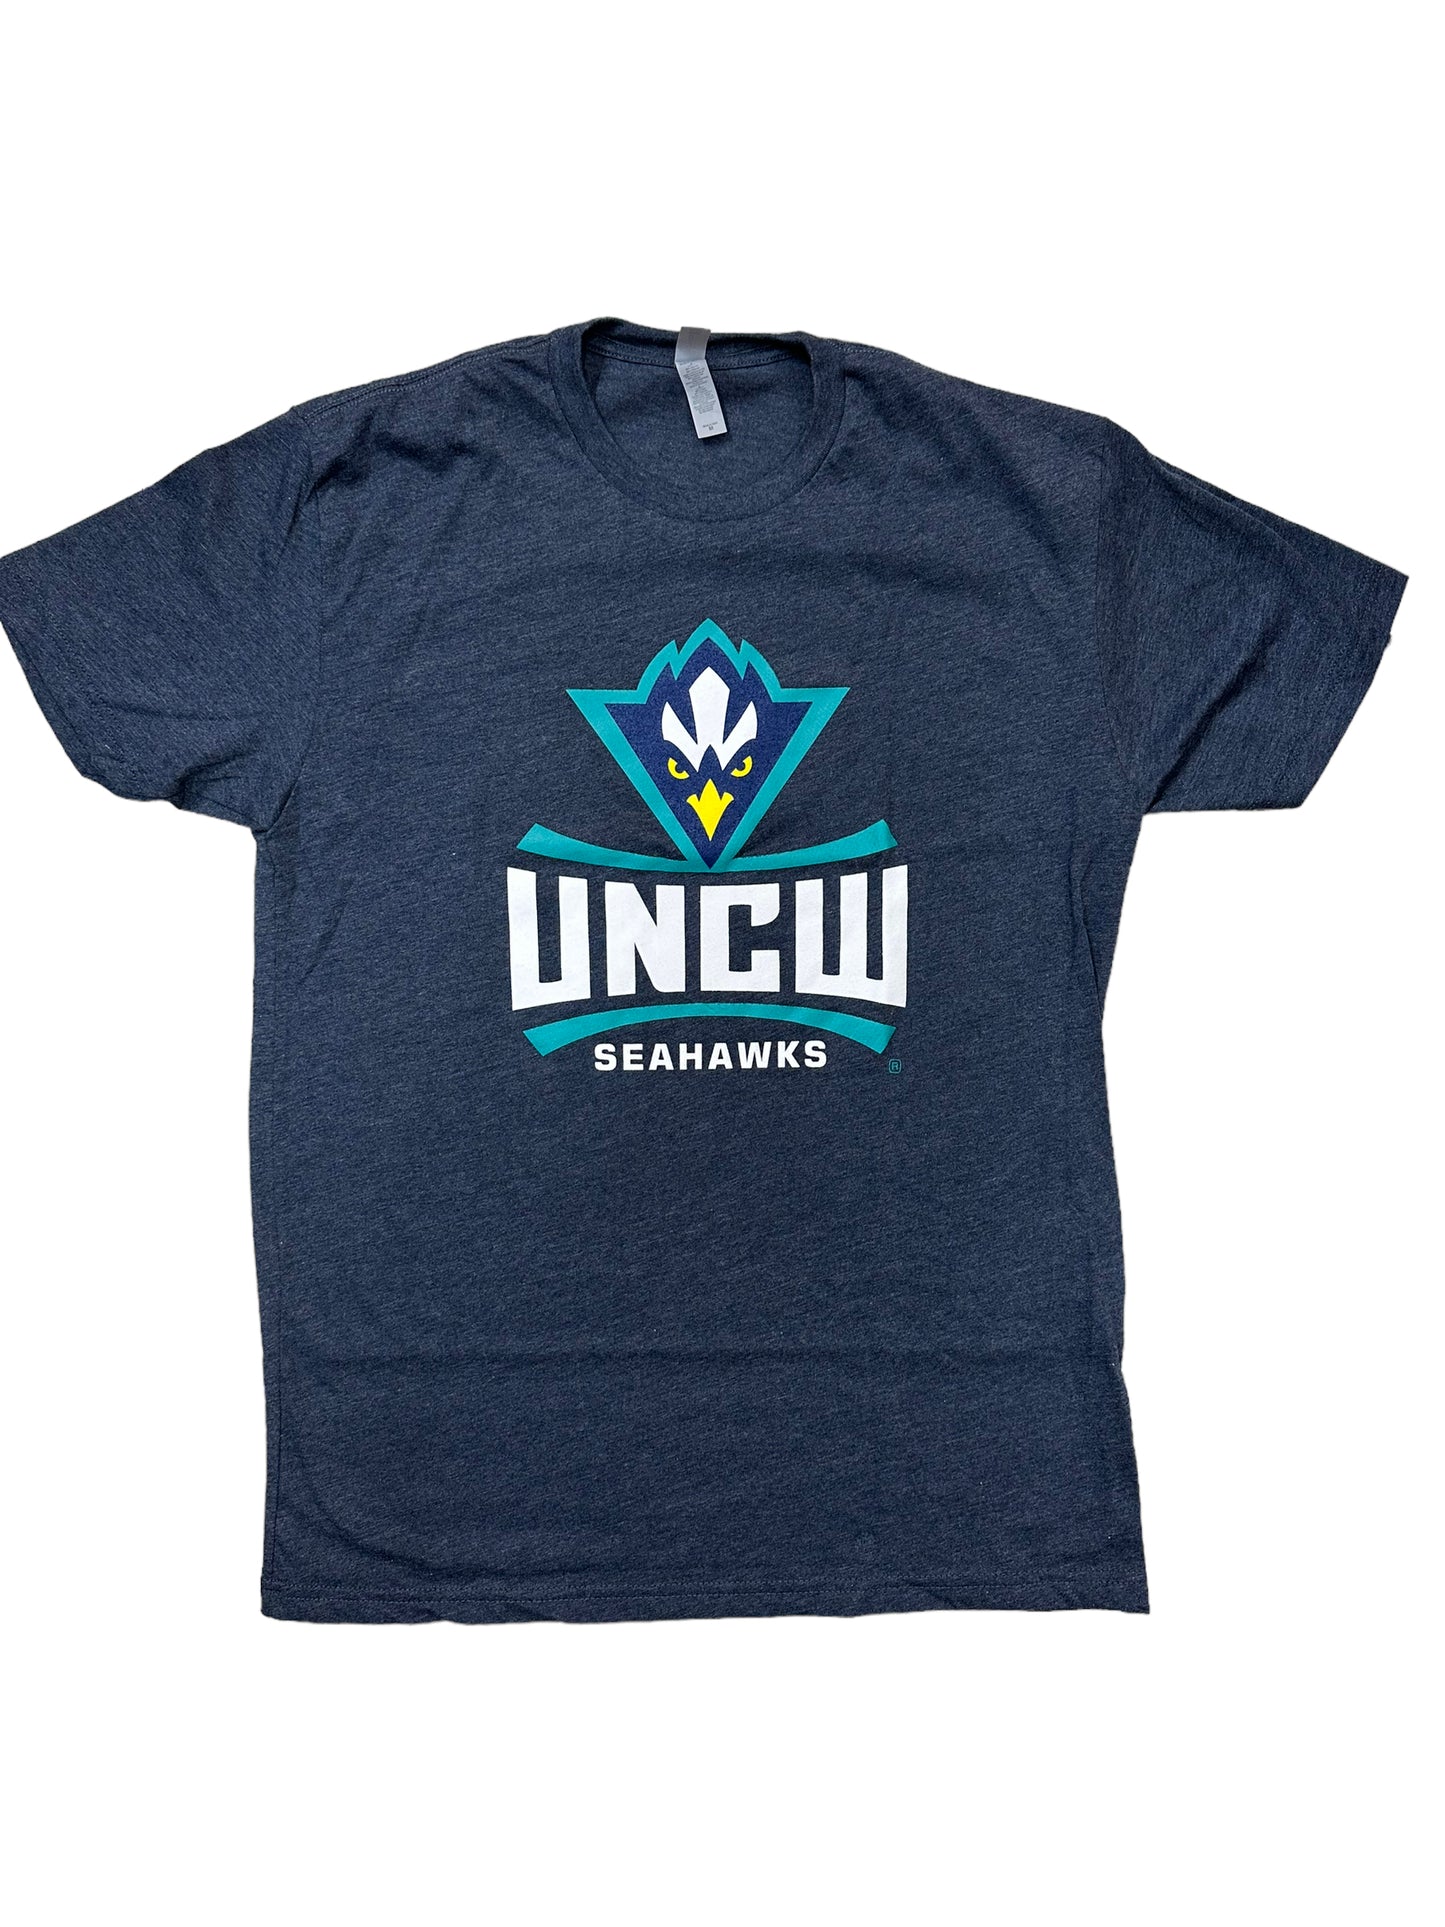 Uncw Full logo - T Shirt - Midnight Navy